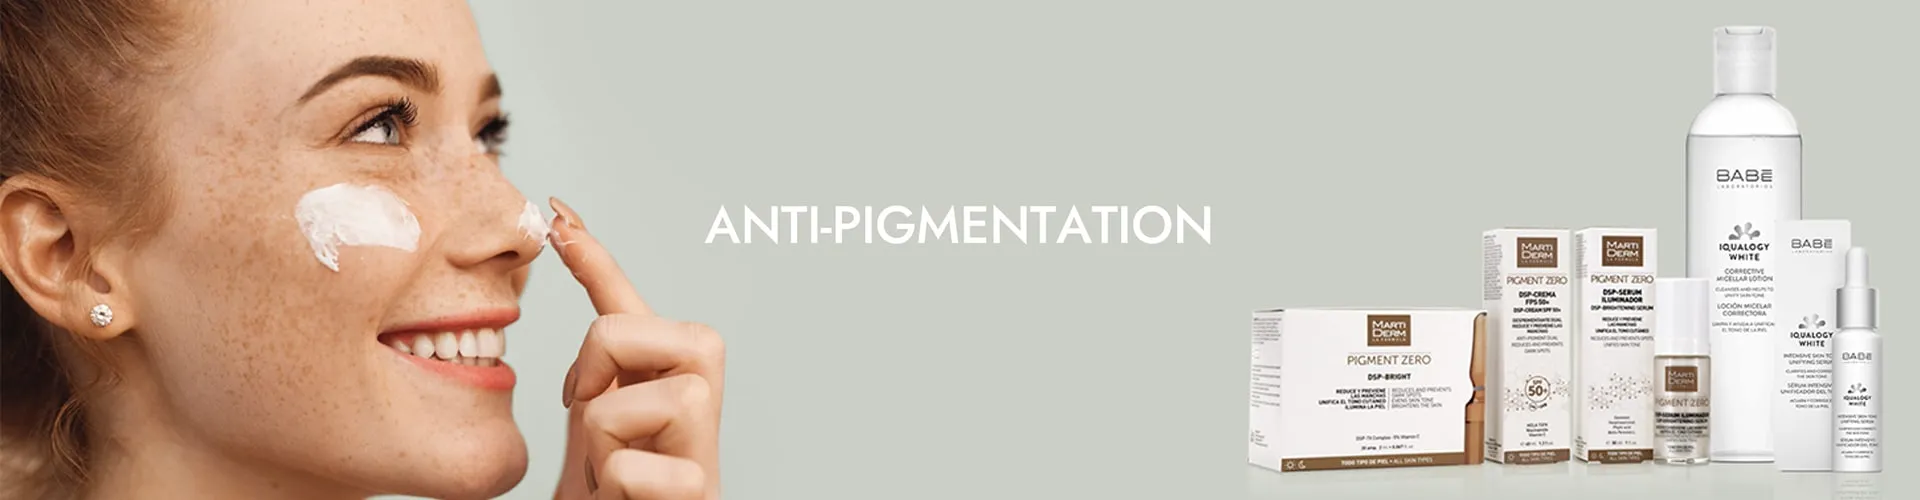 category_anti_pigmentation-min